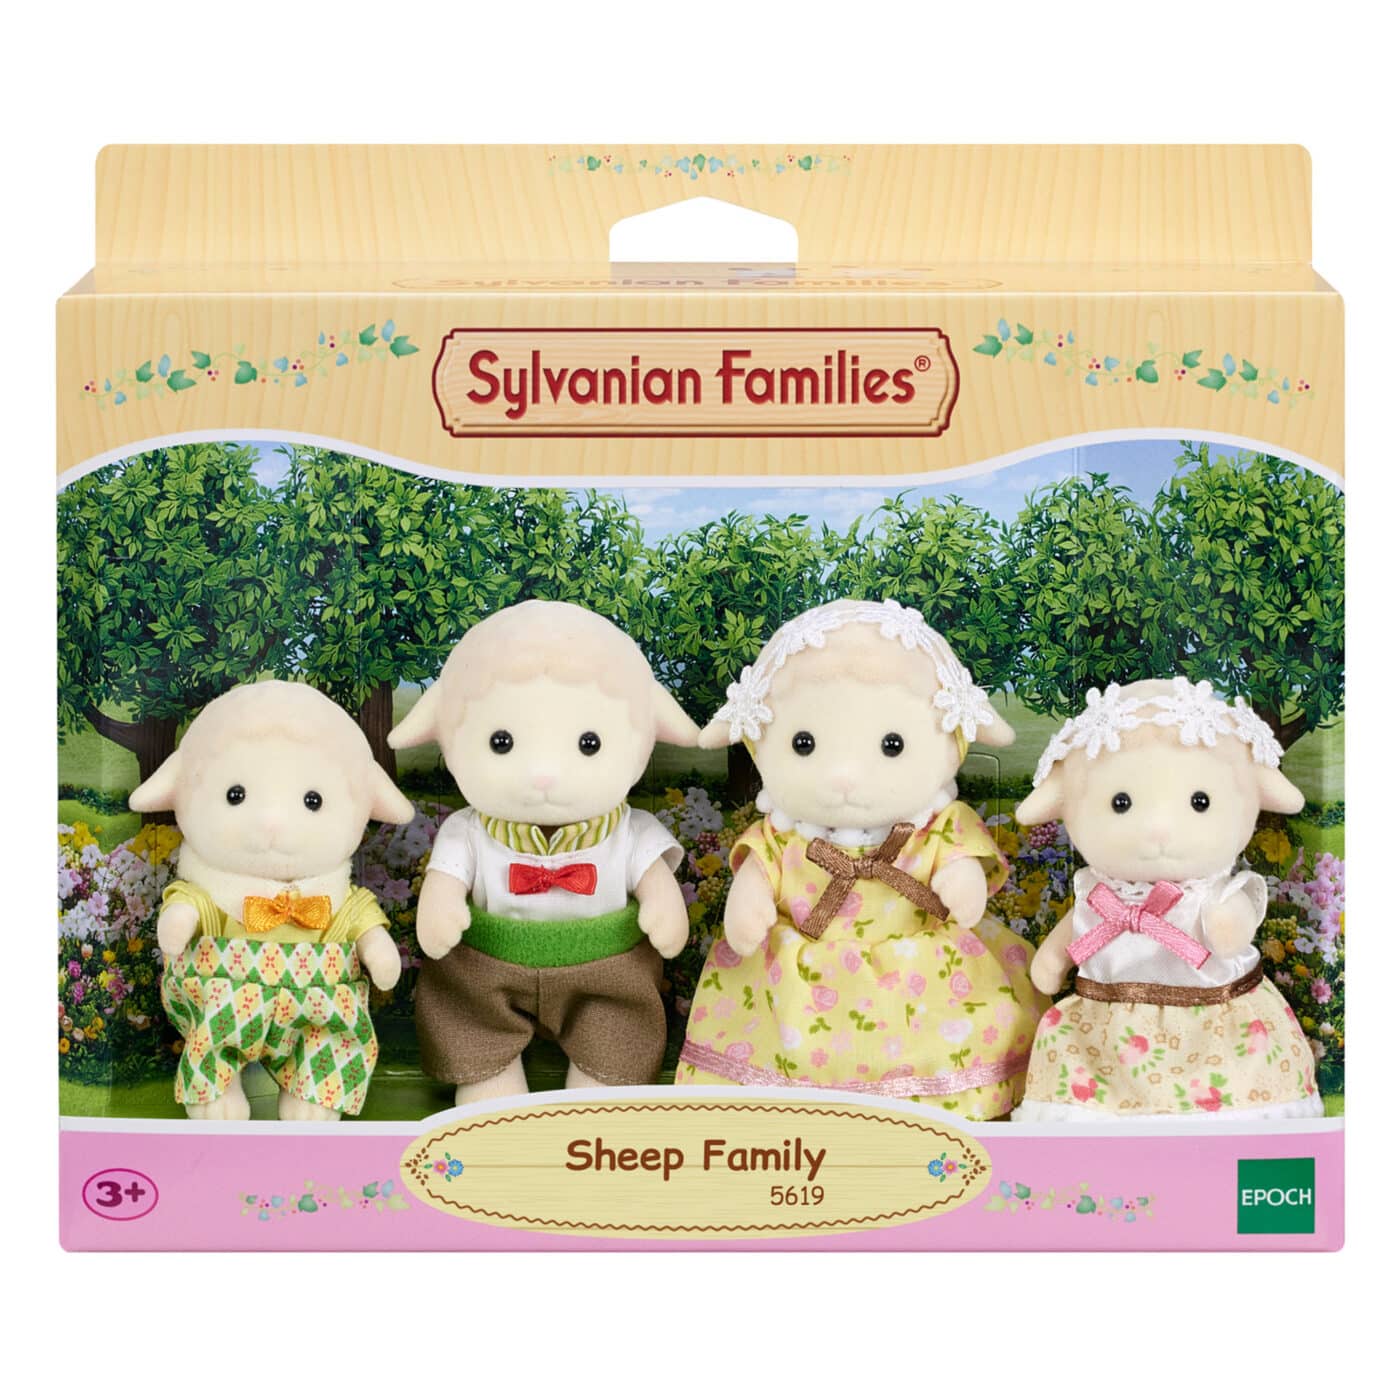 Sylvanian Families - Sheep Family 5619